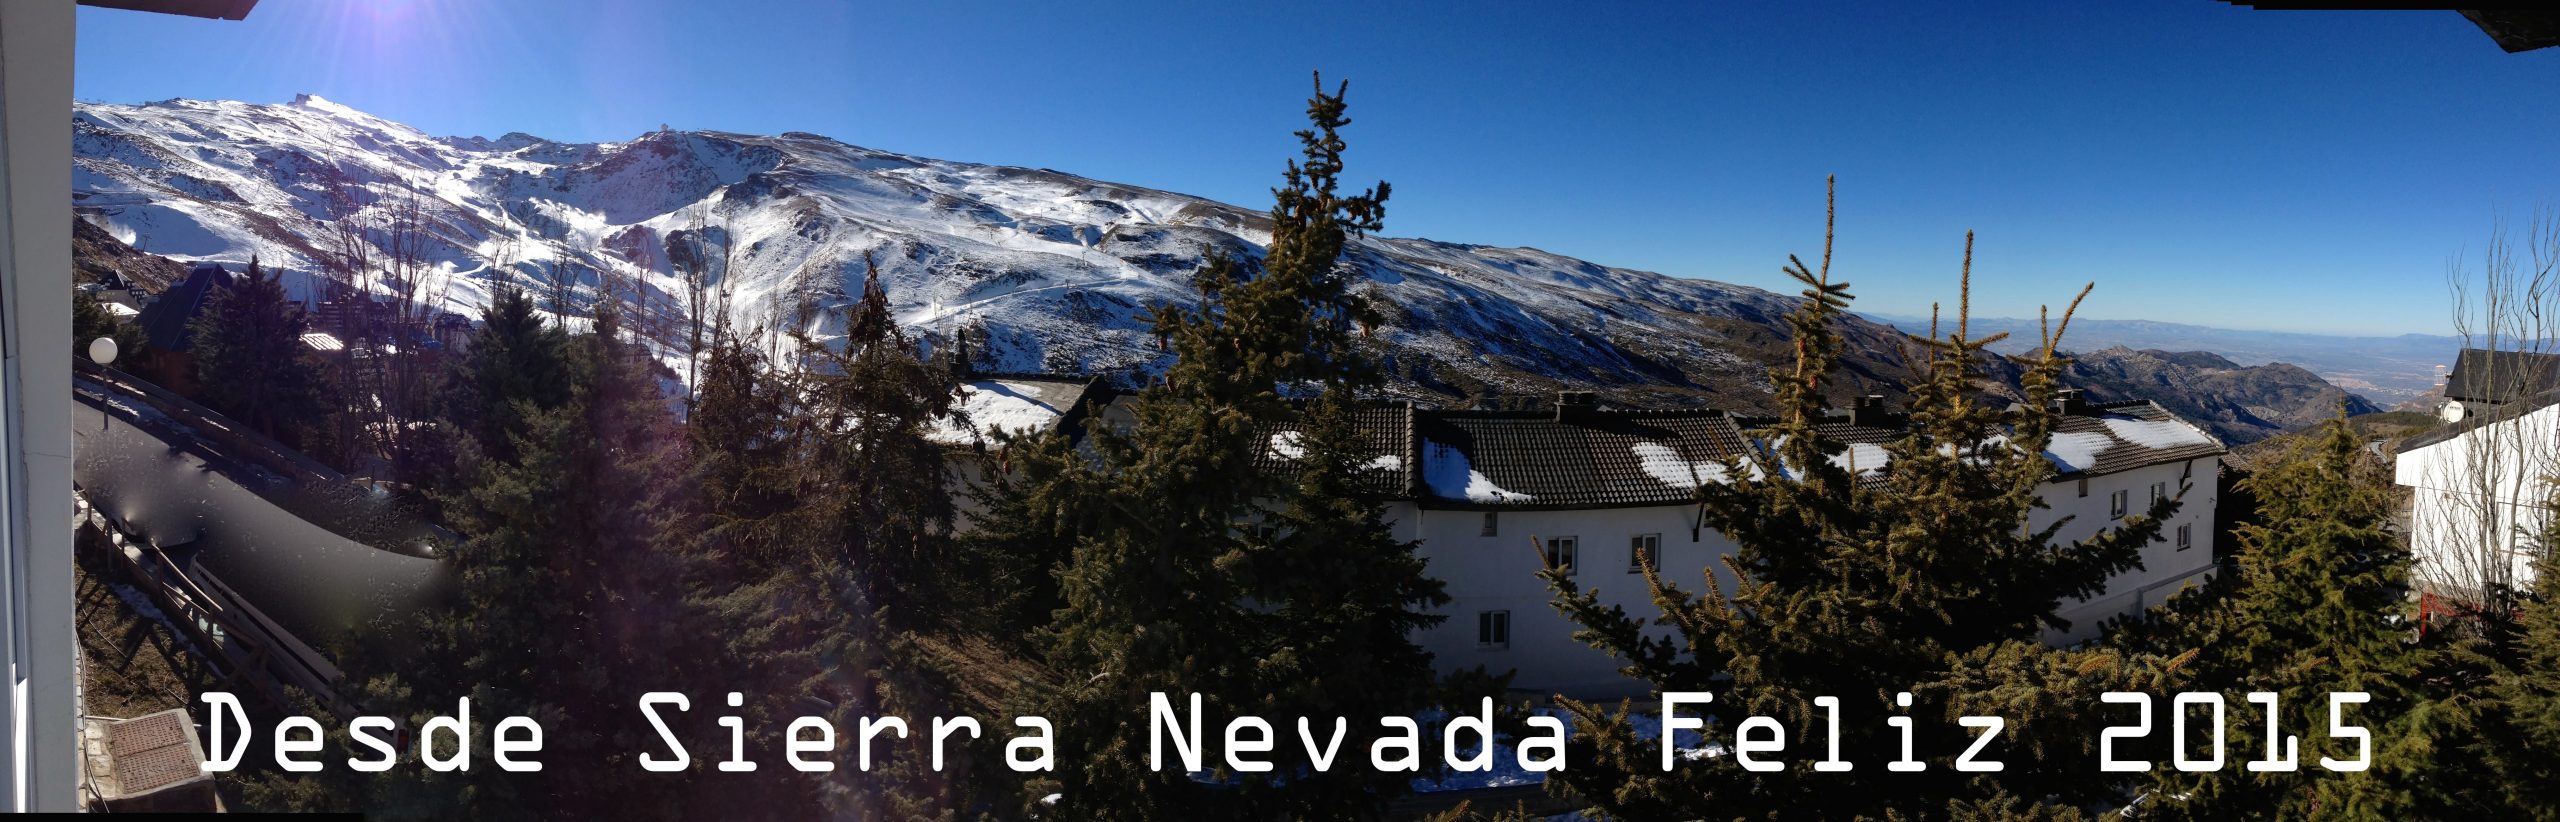 Desde Sierra Nevada Feliz 2015.